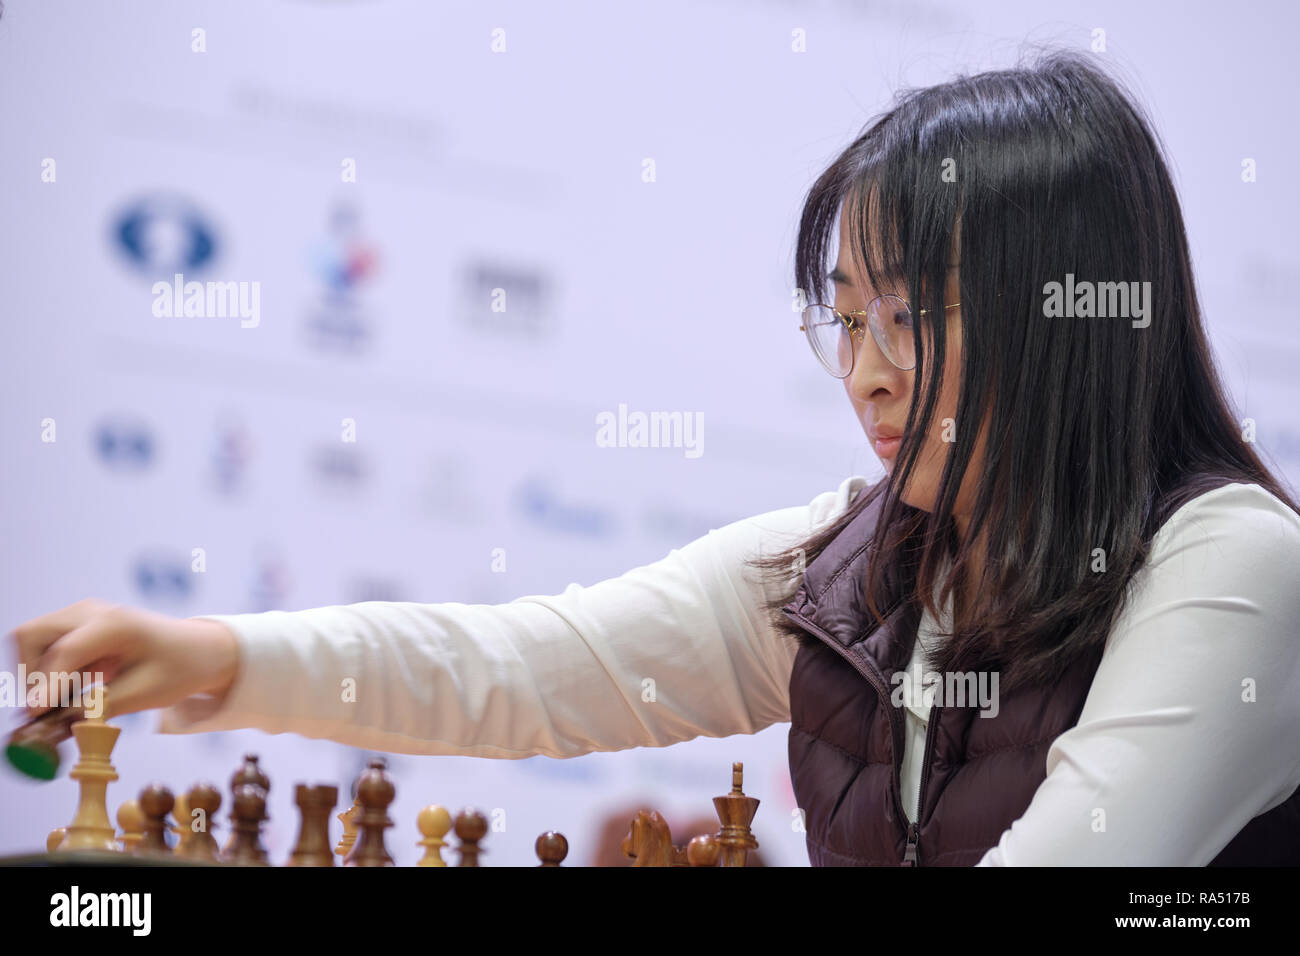 Ju Wenjun won the The The Tata Steel Chess India Blitz